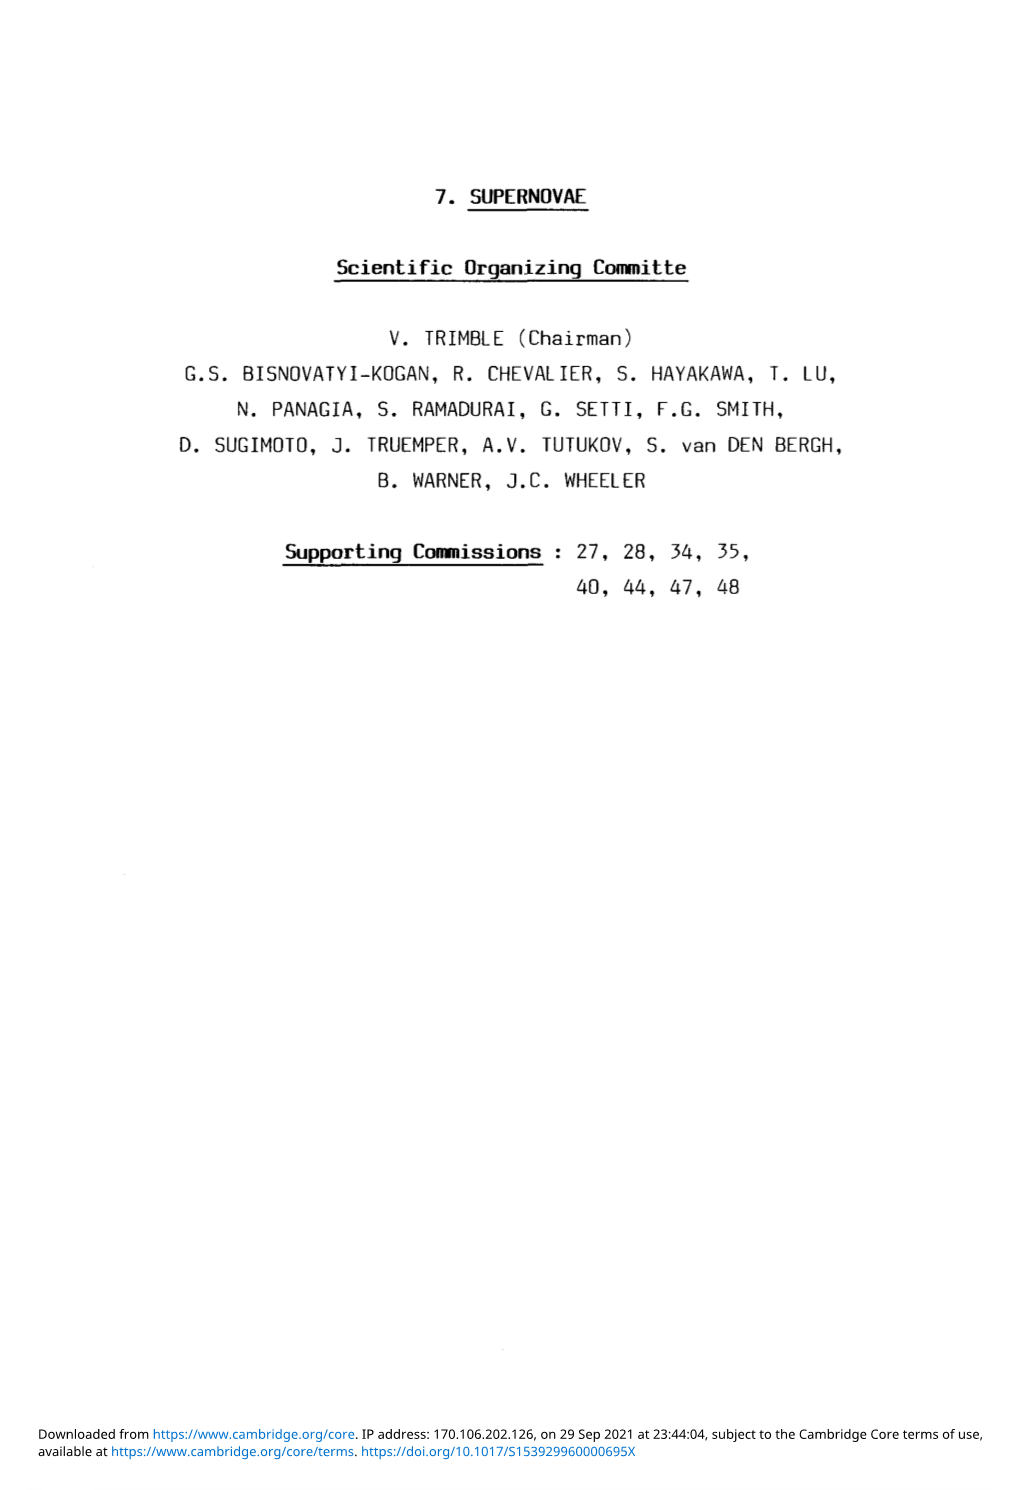 7. SUPERNOVAE Scientific Organizing Committe V. TRIMBLE